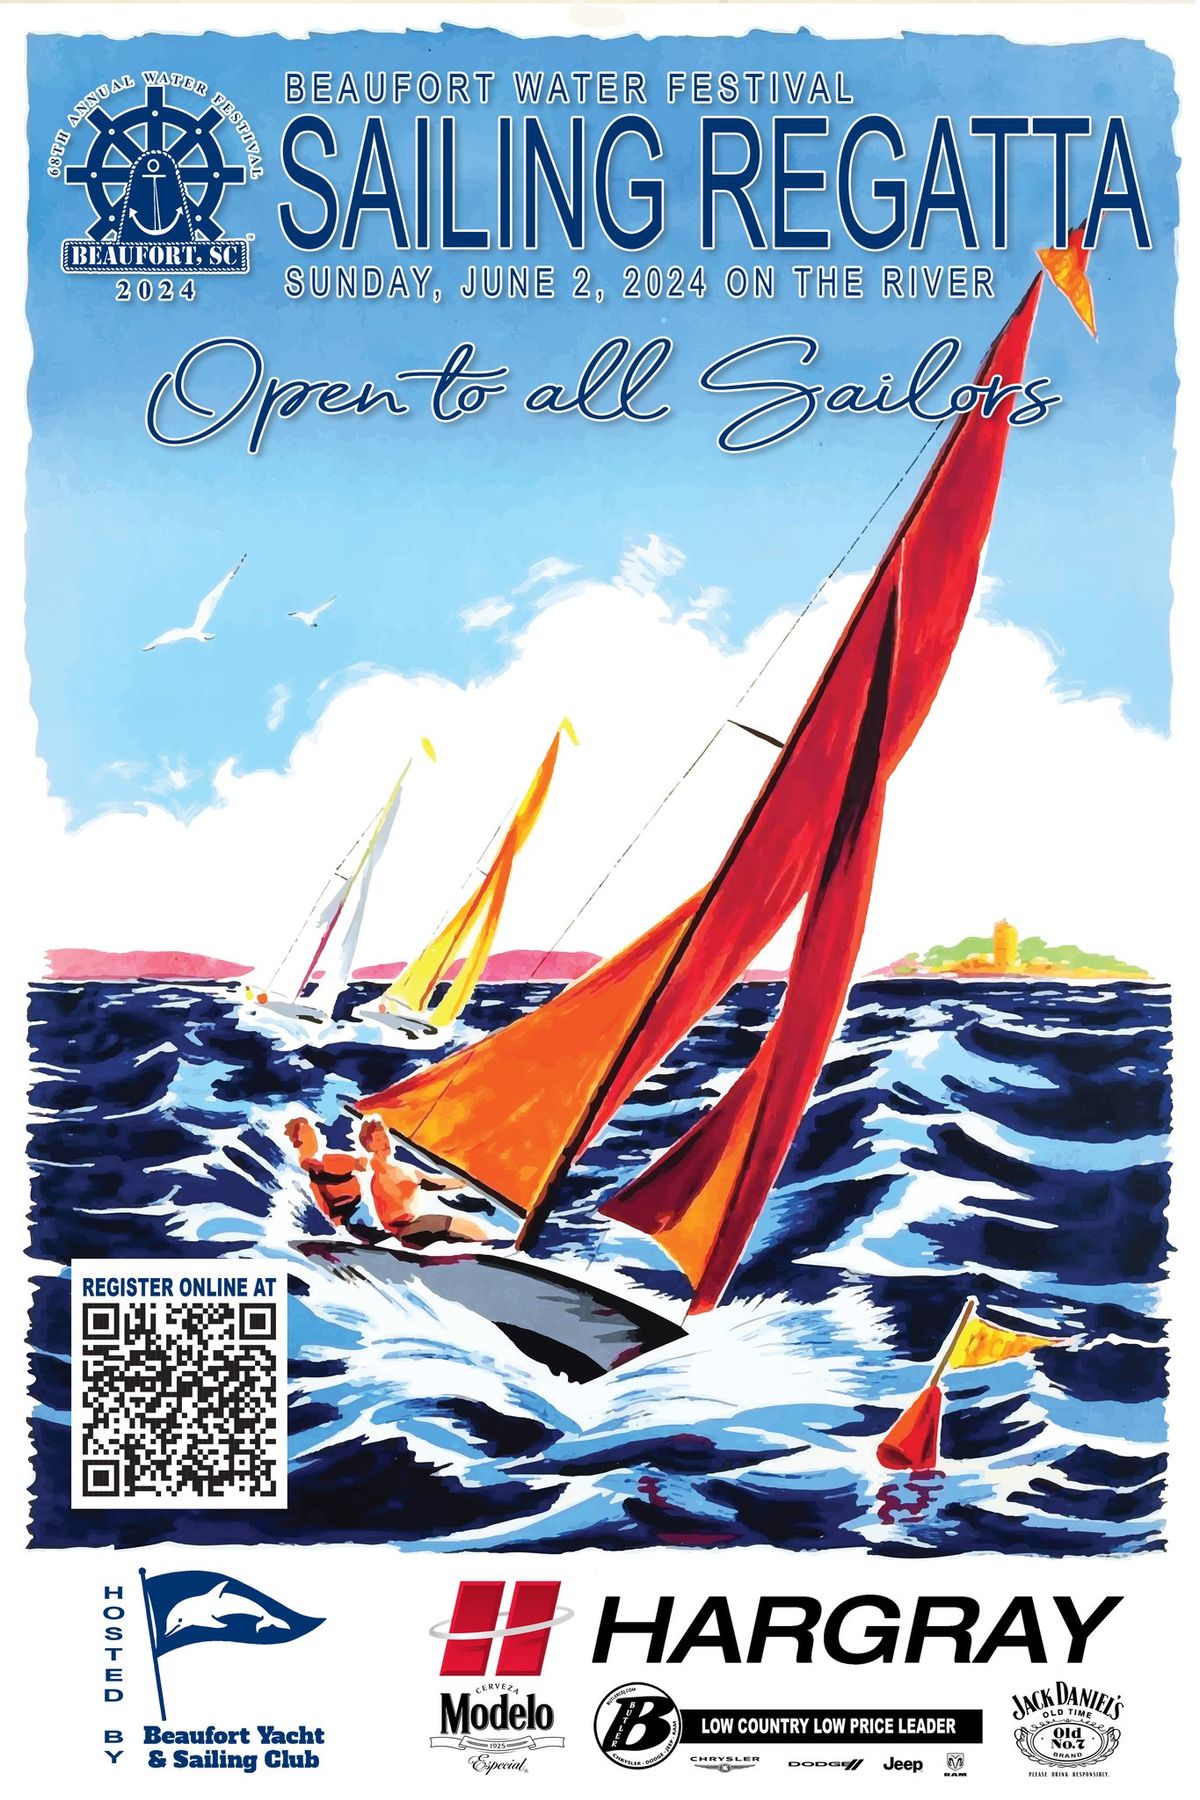 Beaufort Water Festival Sailing Regatta   Sponsored by: Beaufort Yacht & Sailing Club